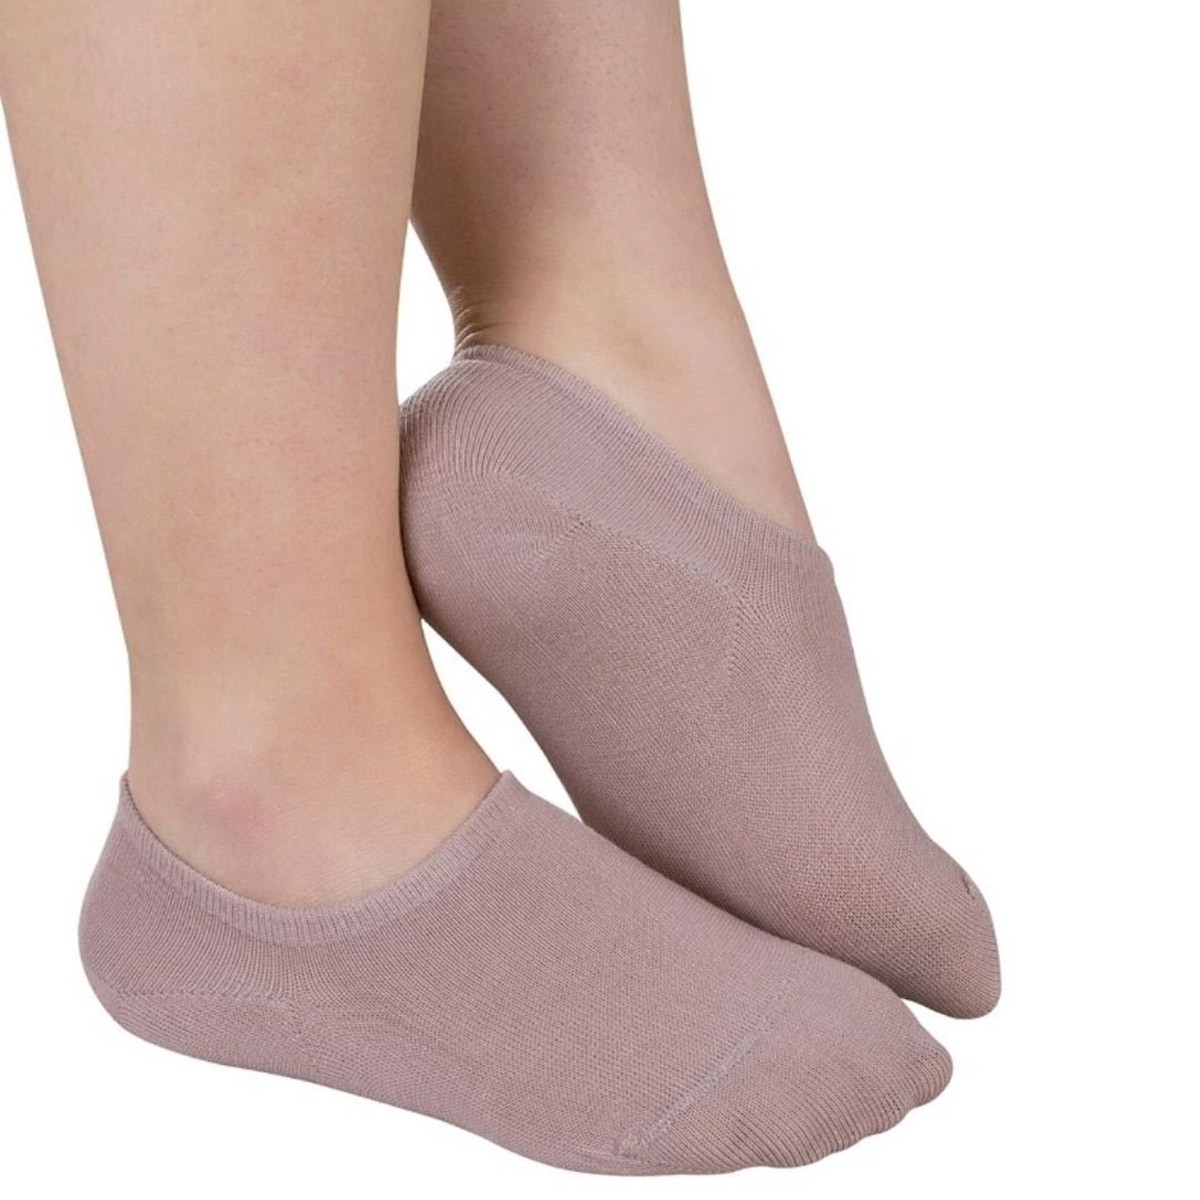 KIT com 3 meia sapatilha invisível feminina Lupo